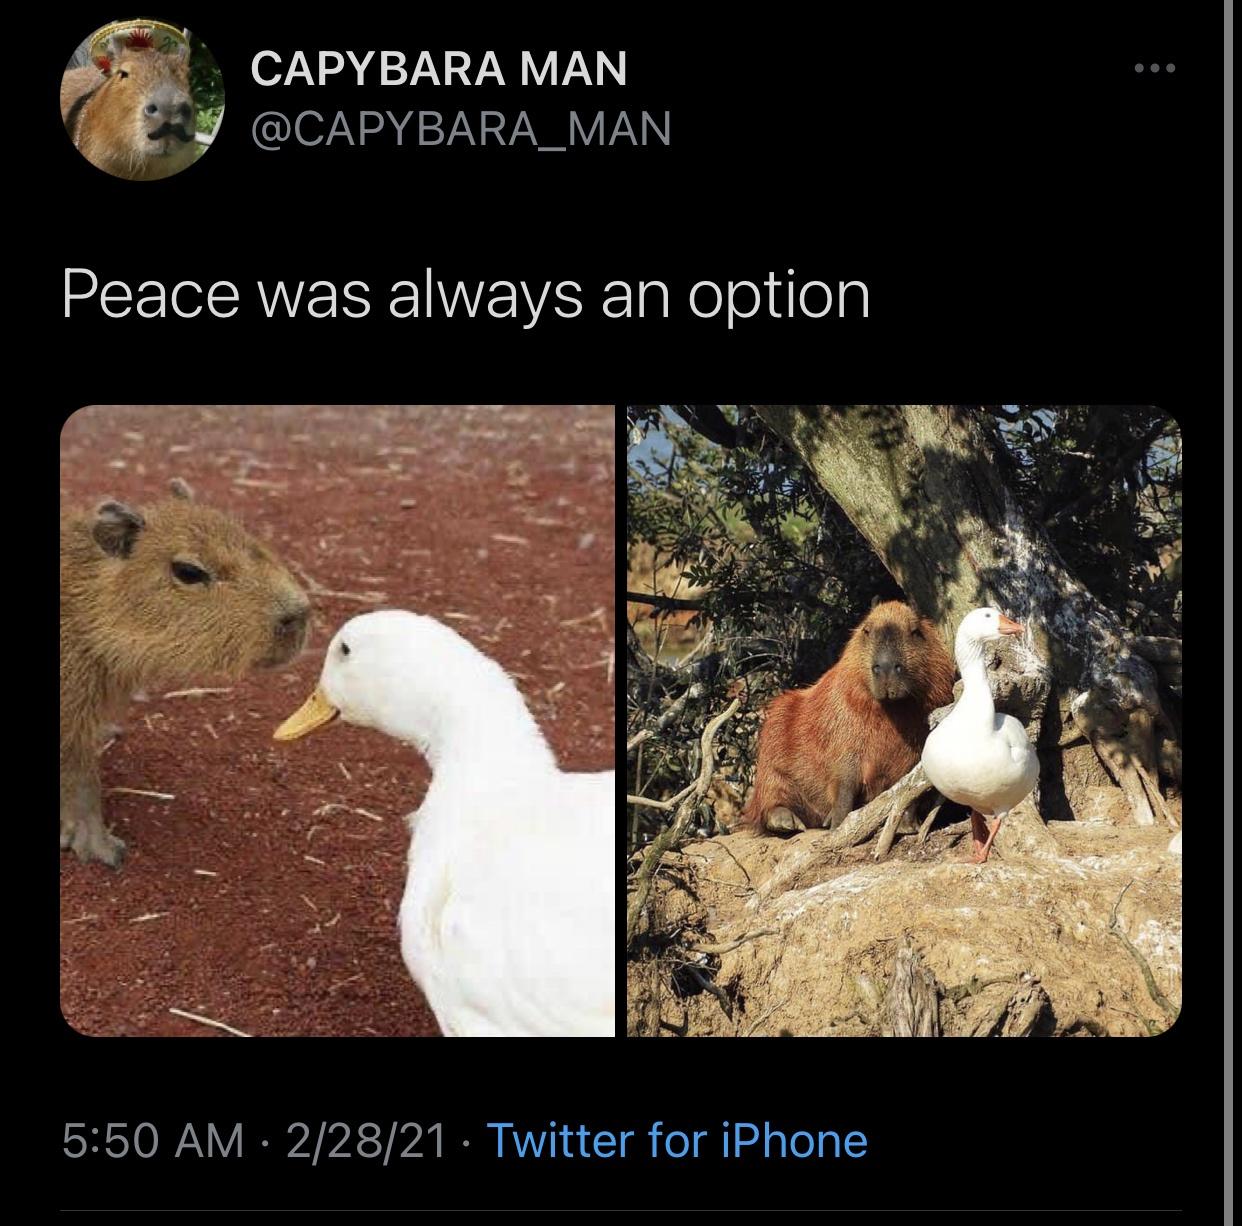 fauna - Capybara Man Peace was always an option 22821 Twitter for iPhone